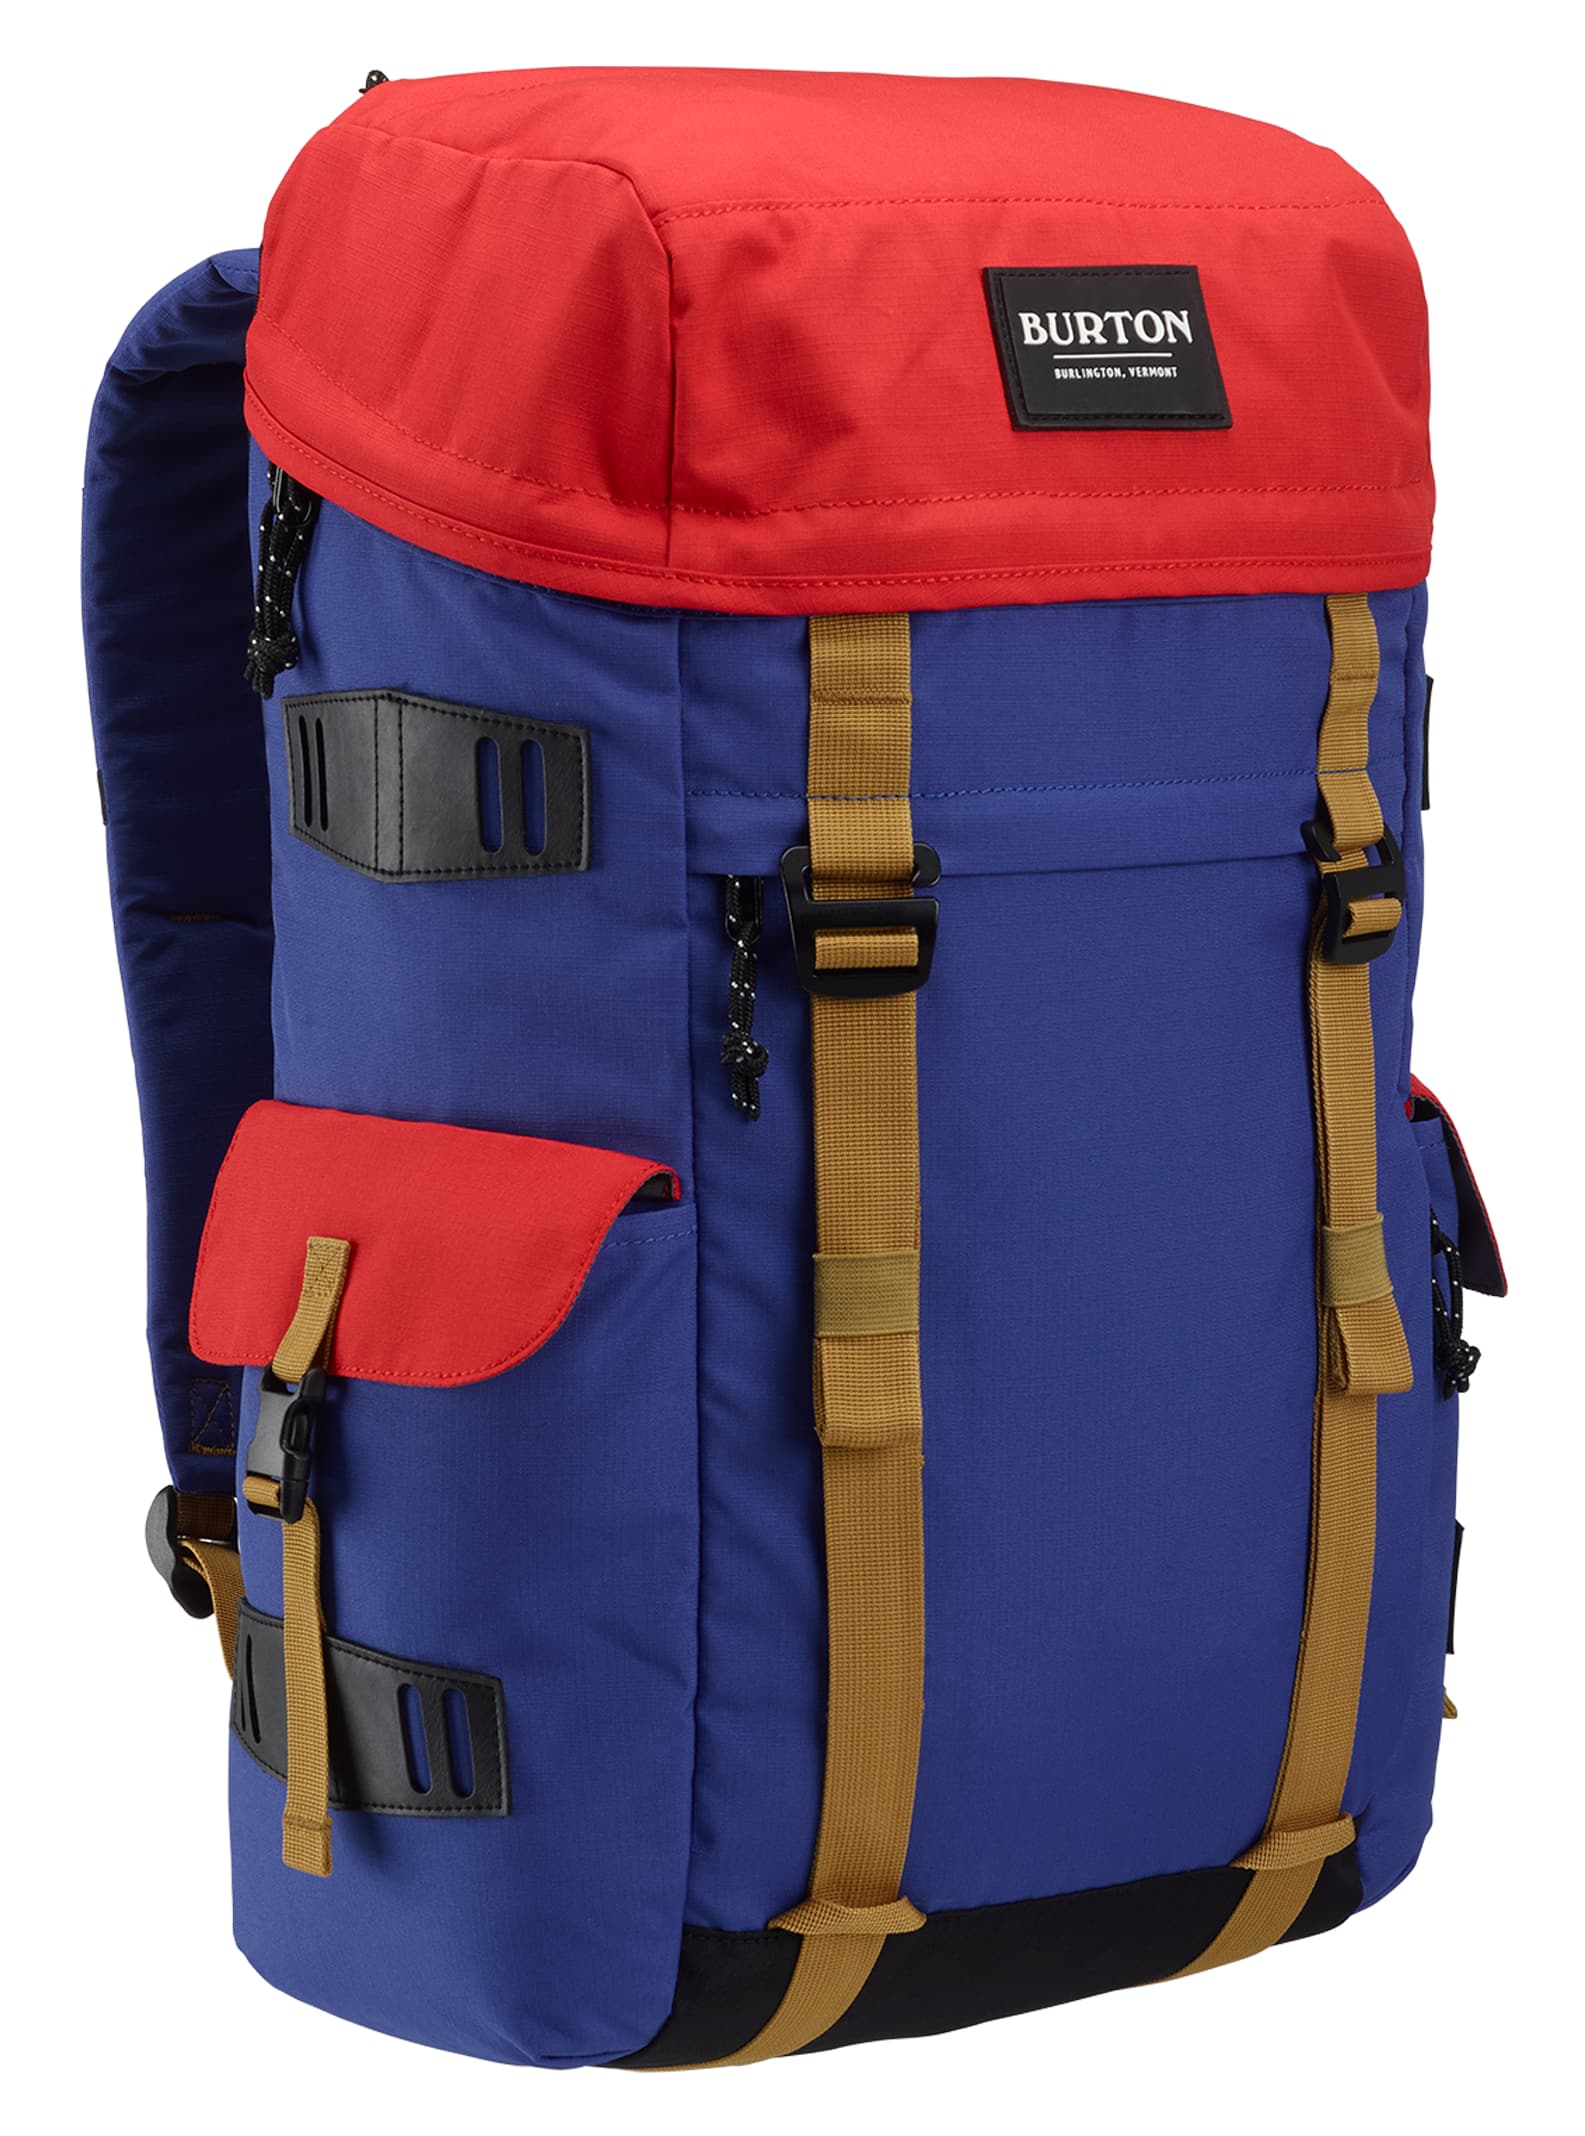 Burton Annex 28L Backpack | Burton.com Winter 2020 US